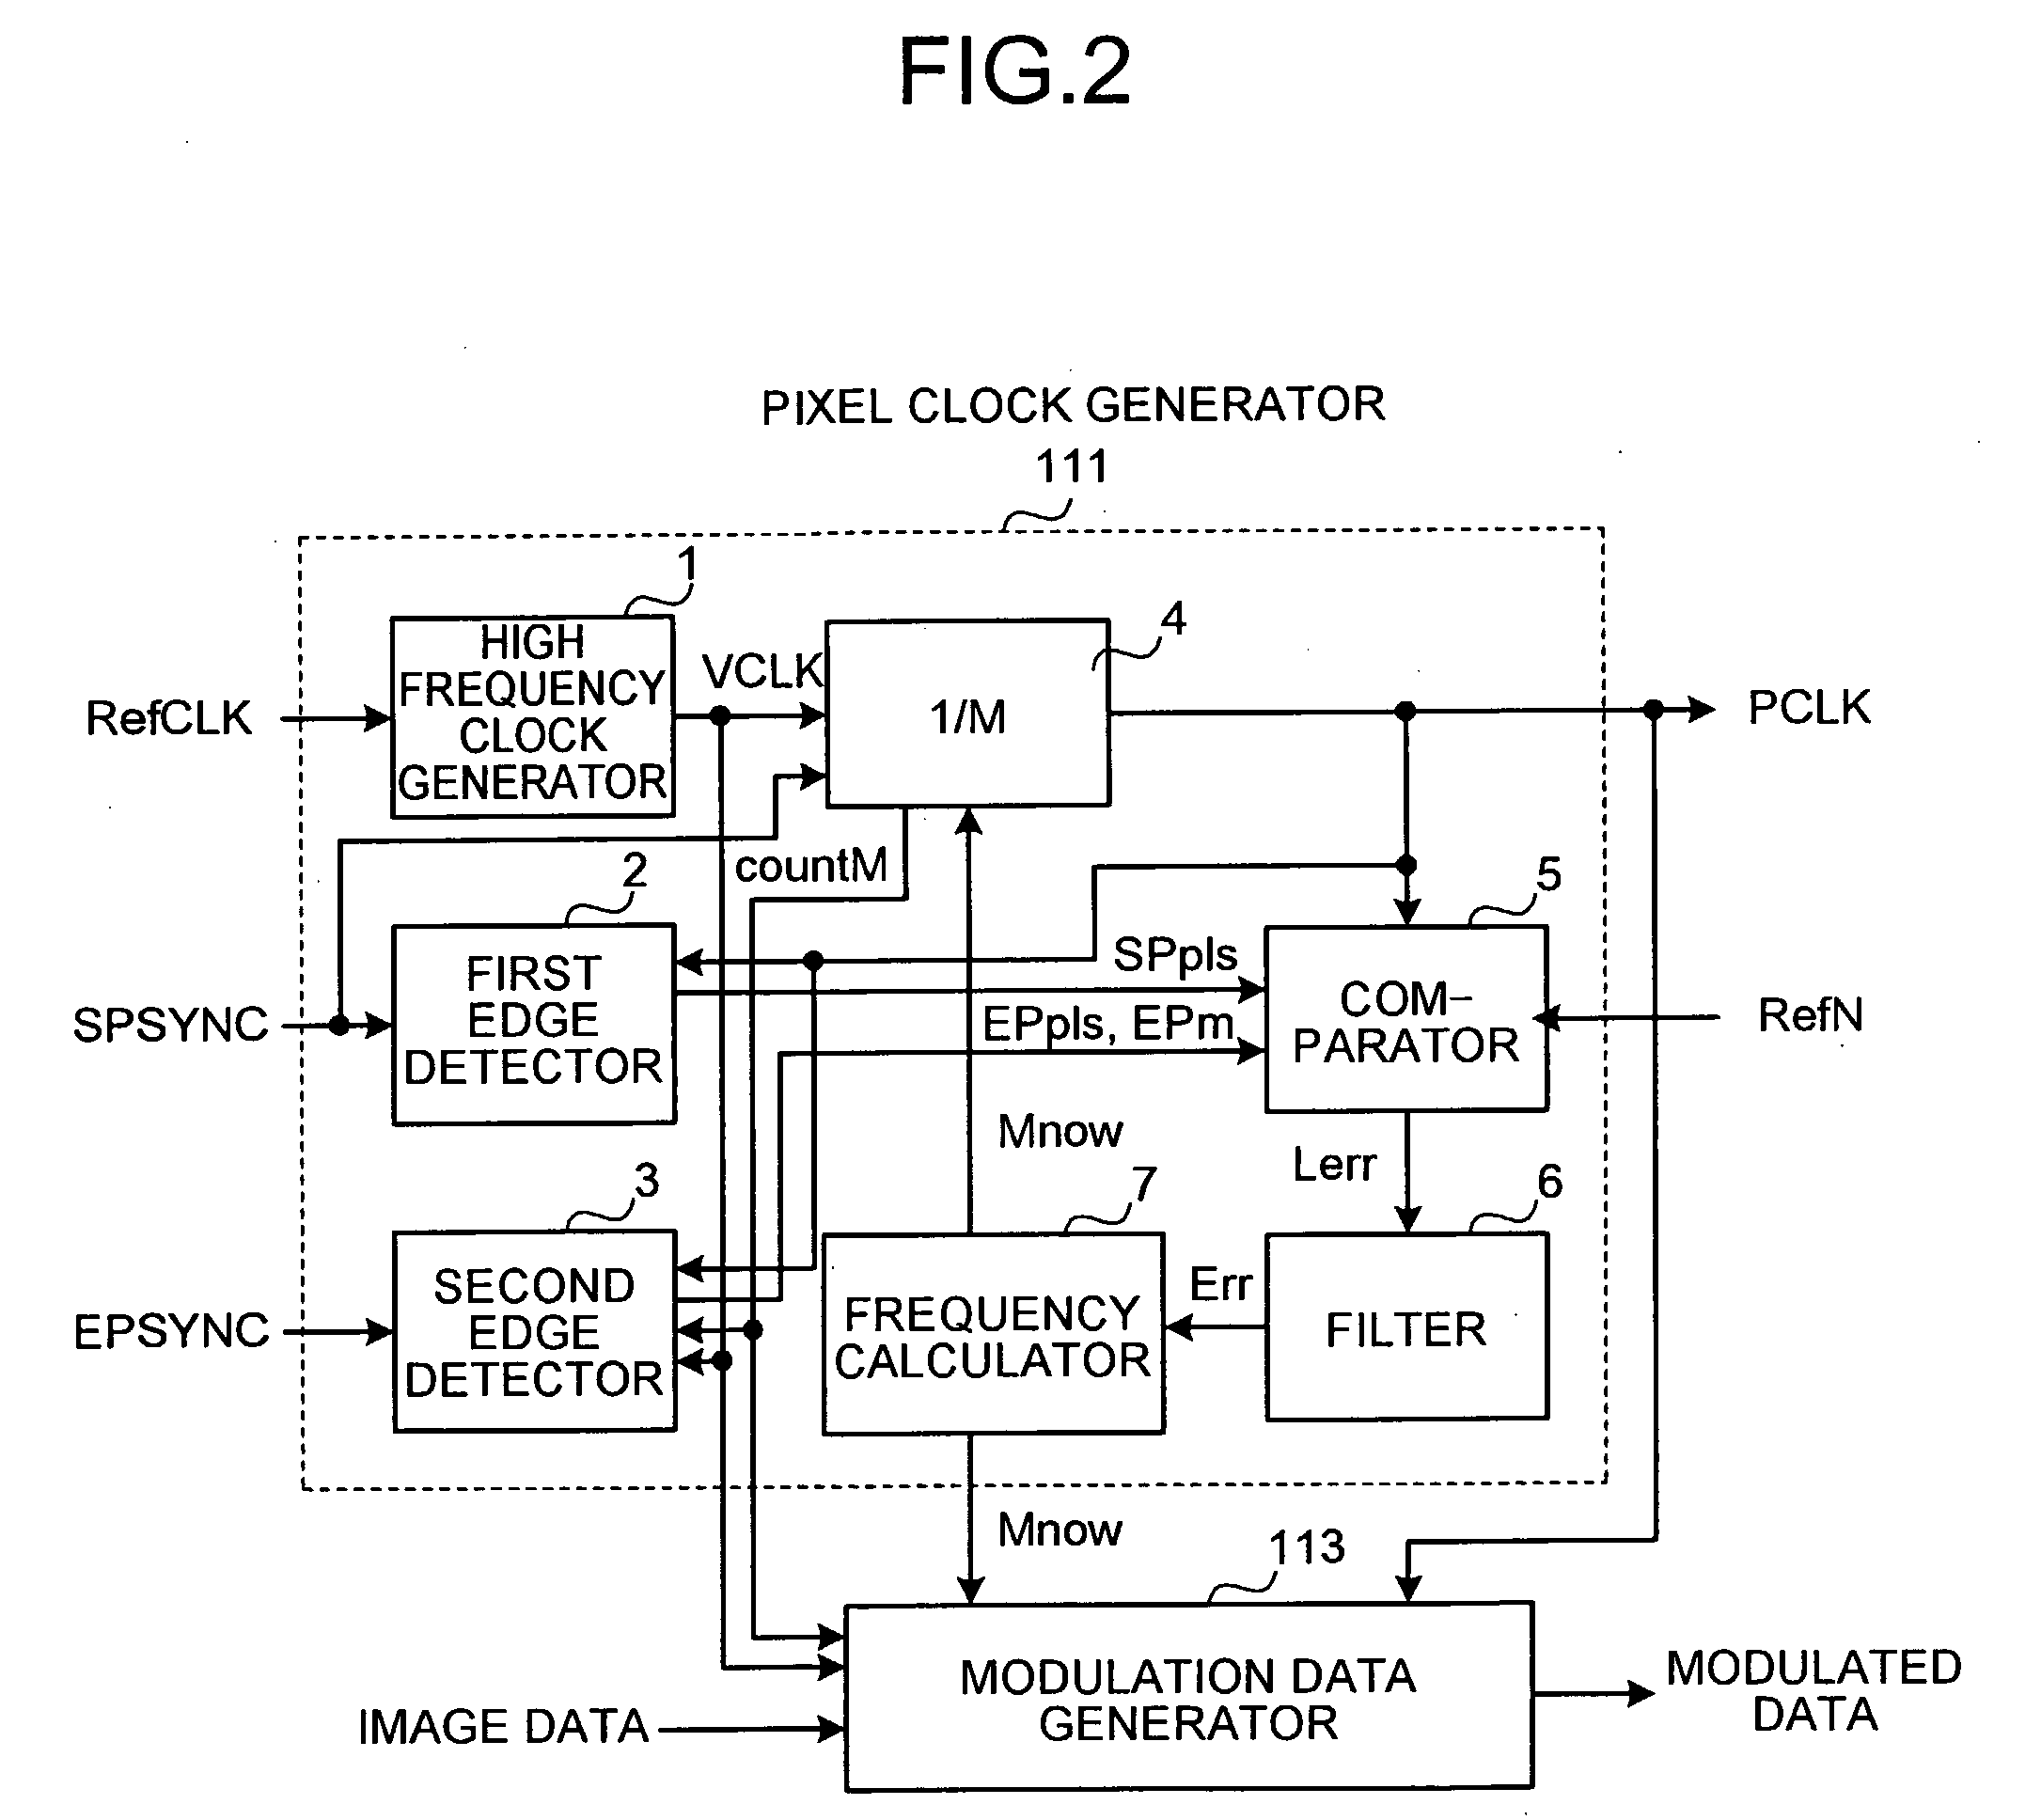 Pixel Clock Generator, Pulse Modulator, and Image Forming Apparatus